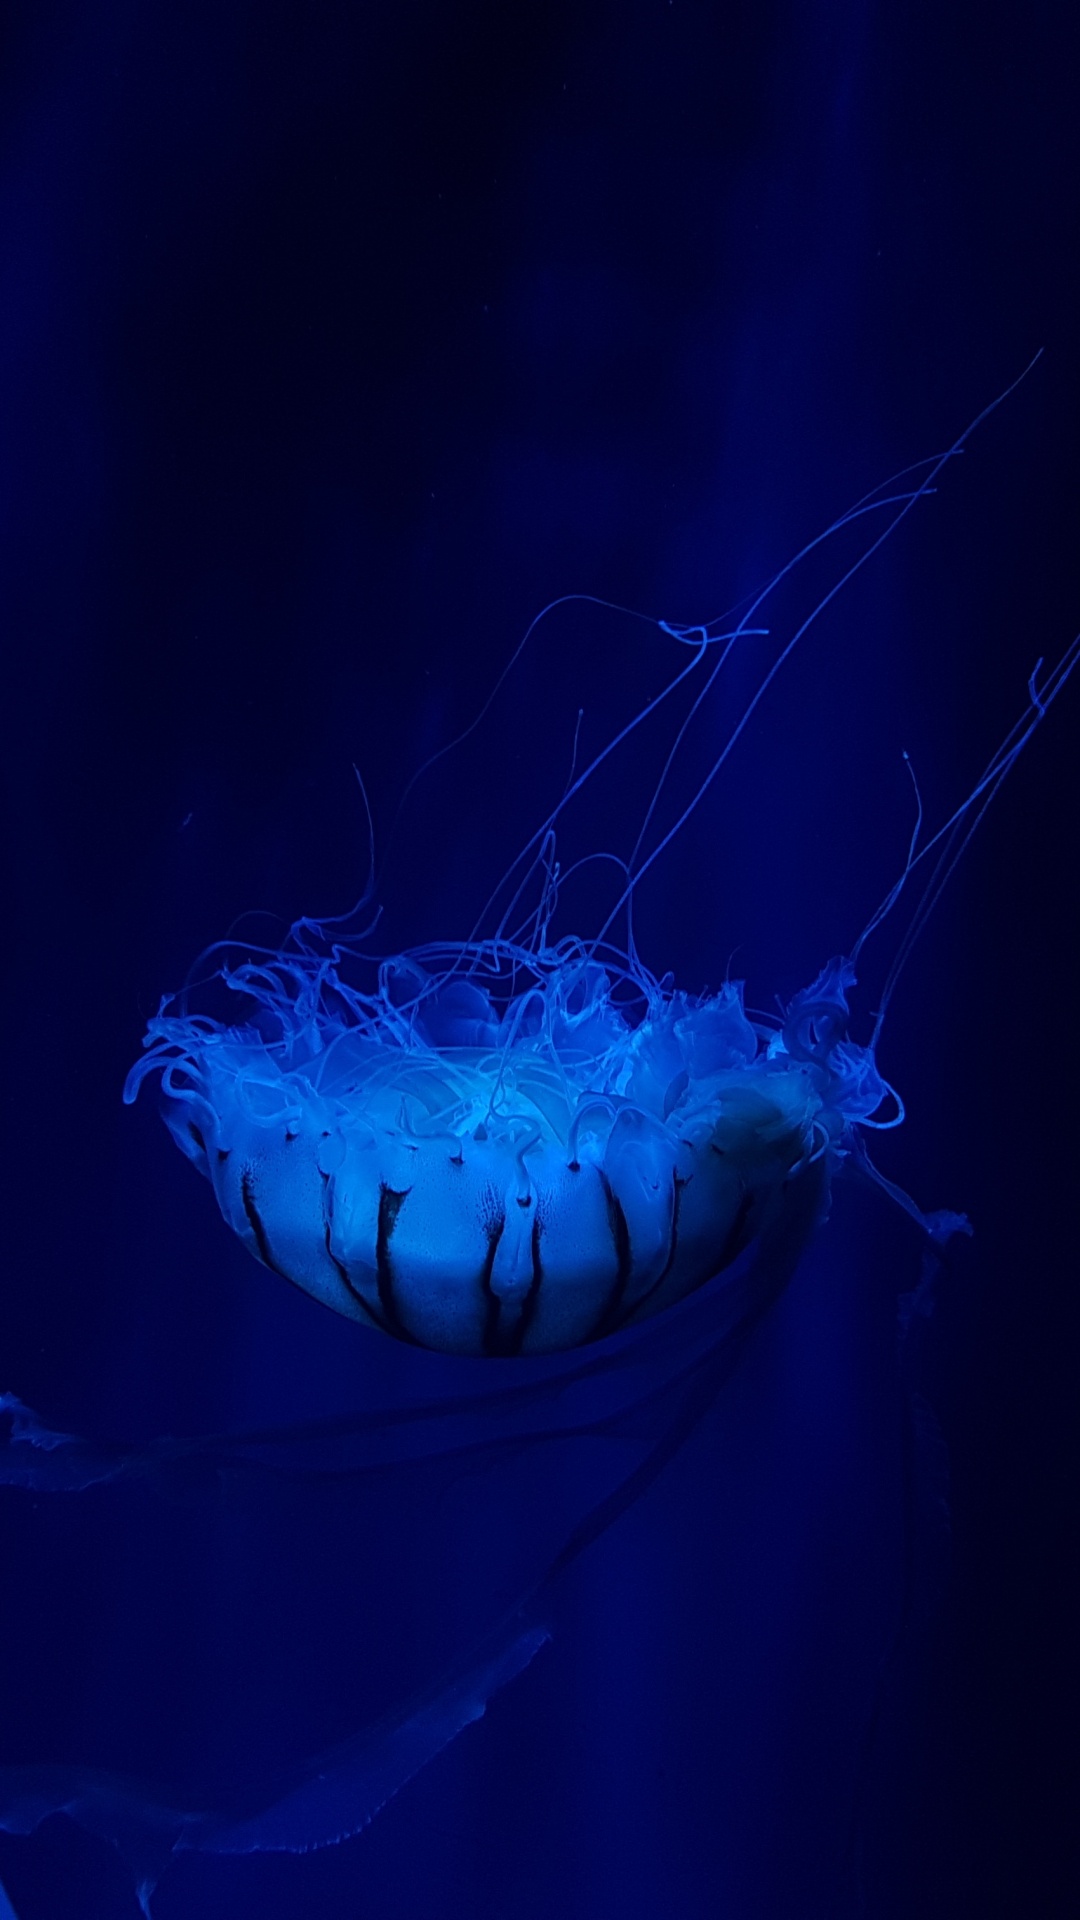 Blue Jellyfish in Blue Water. Wallpaper in 1080x1920 Resolution